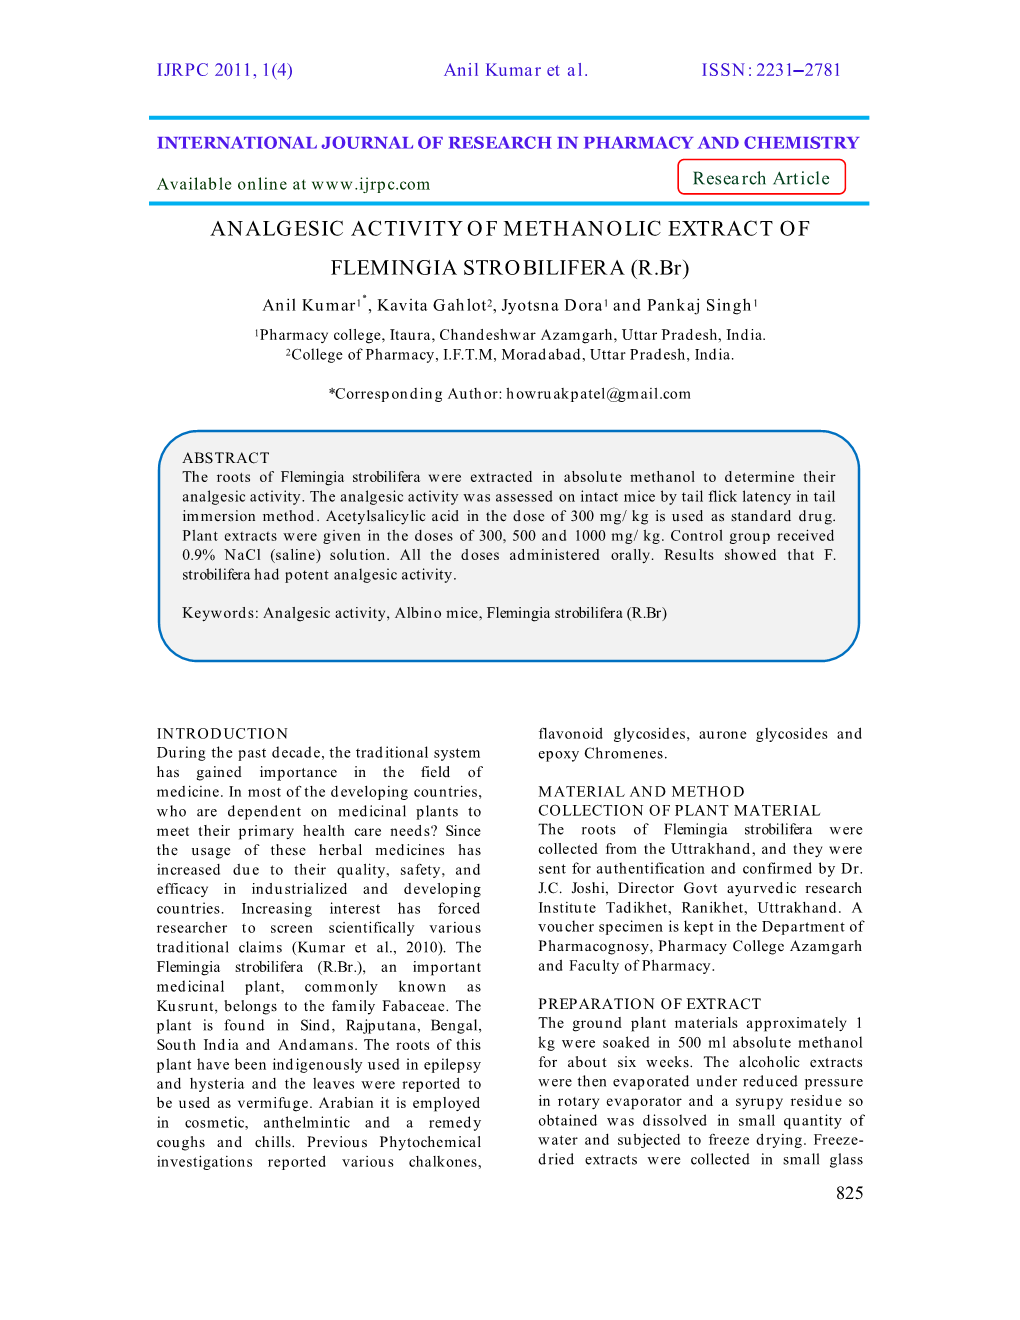 ANALGESIC ACTIVITY of METHANOLIC EXTRACT of FLEMINGIA STROBILIFERA (R.Br)